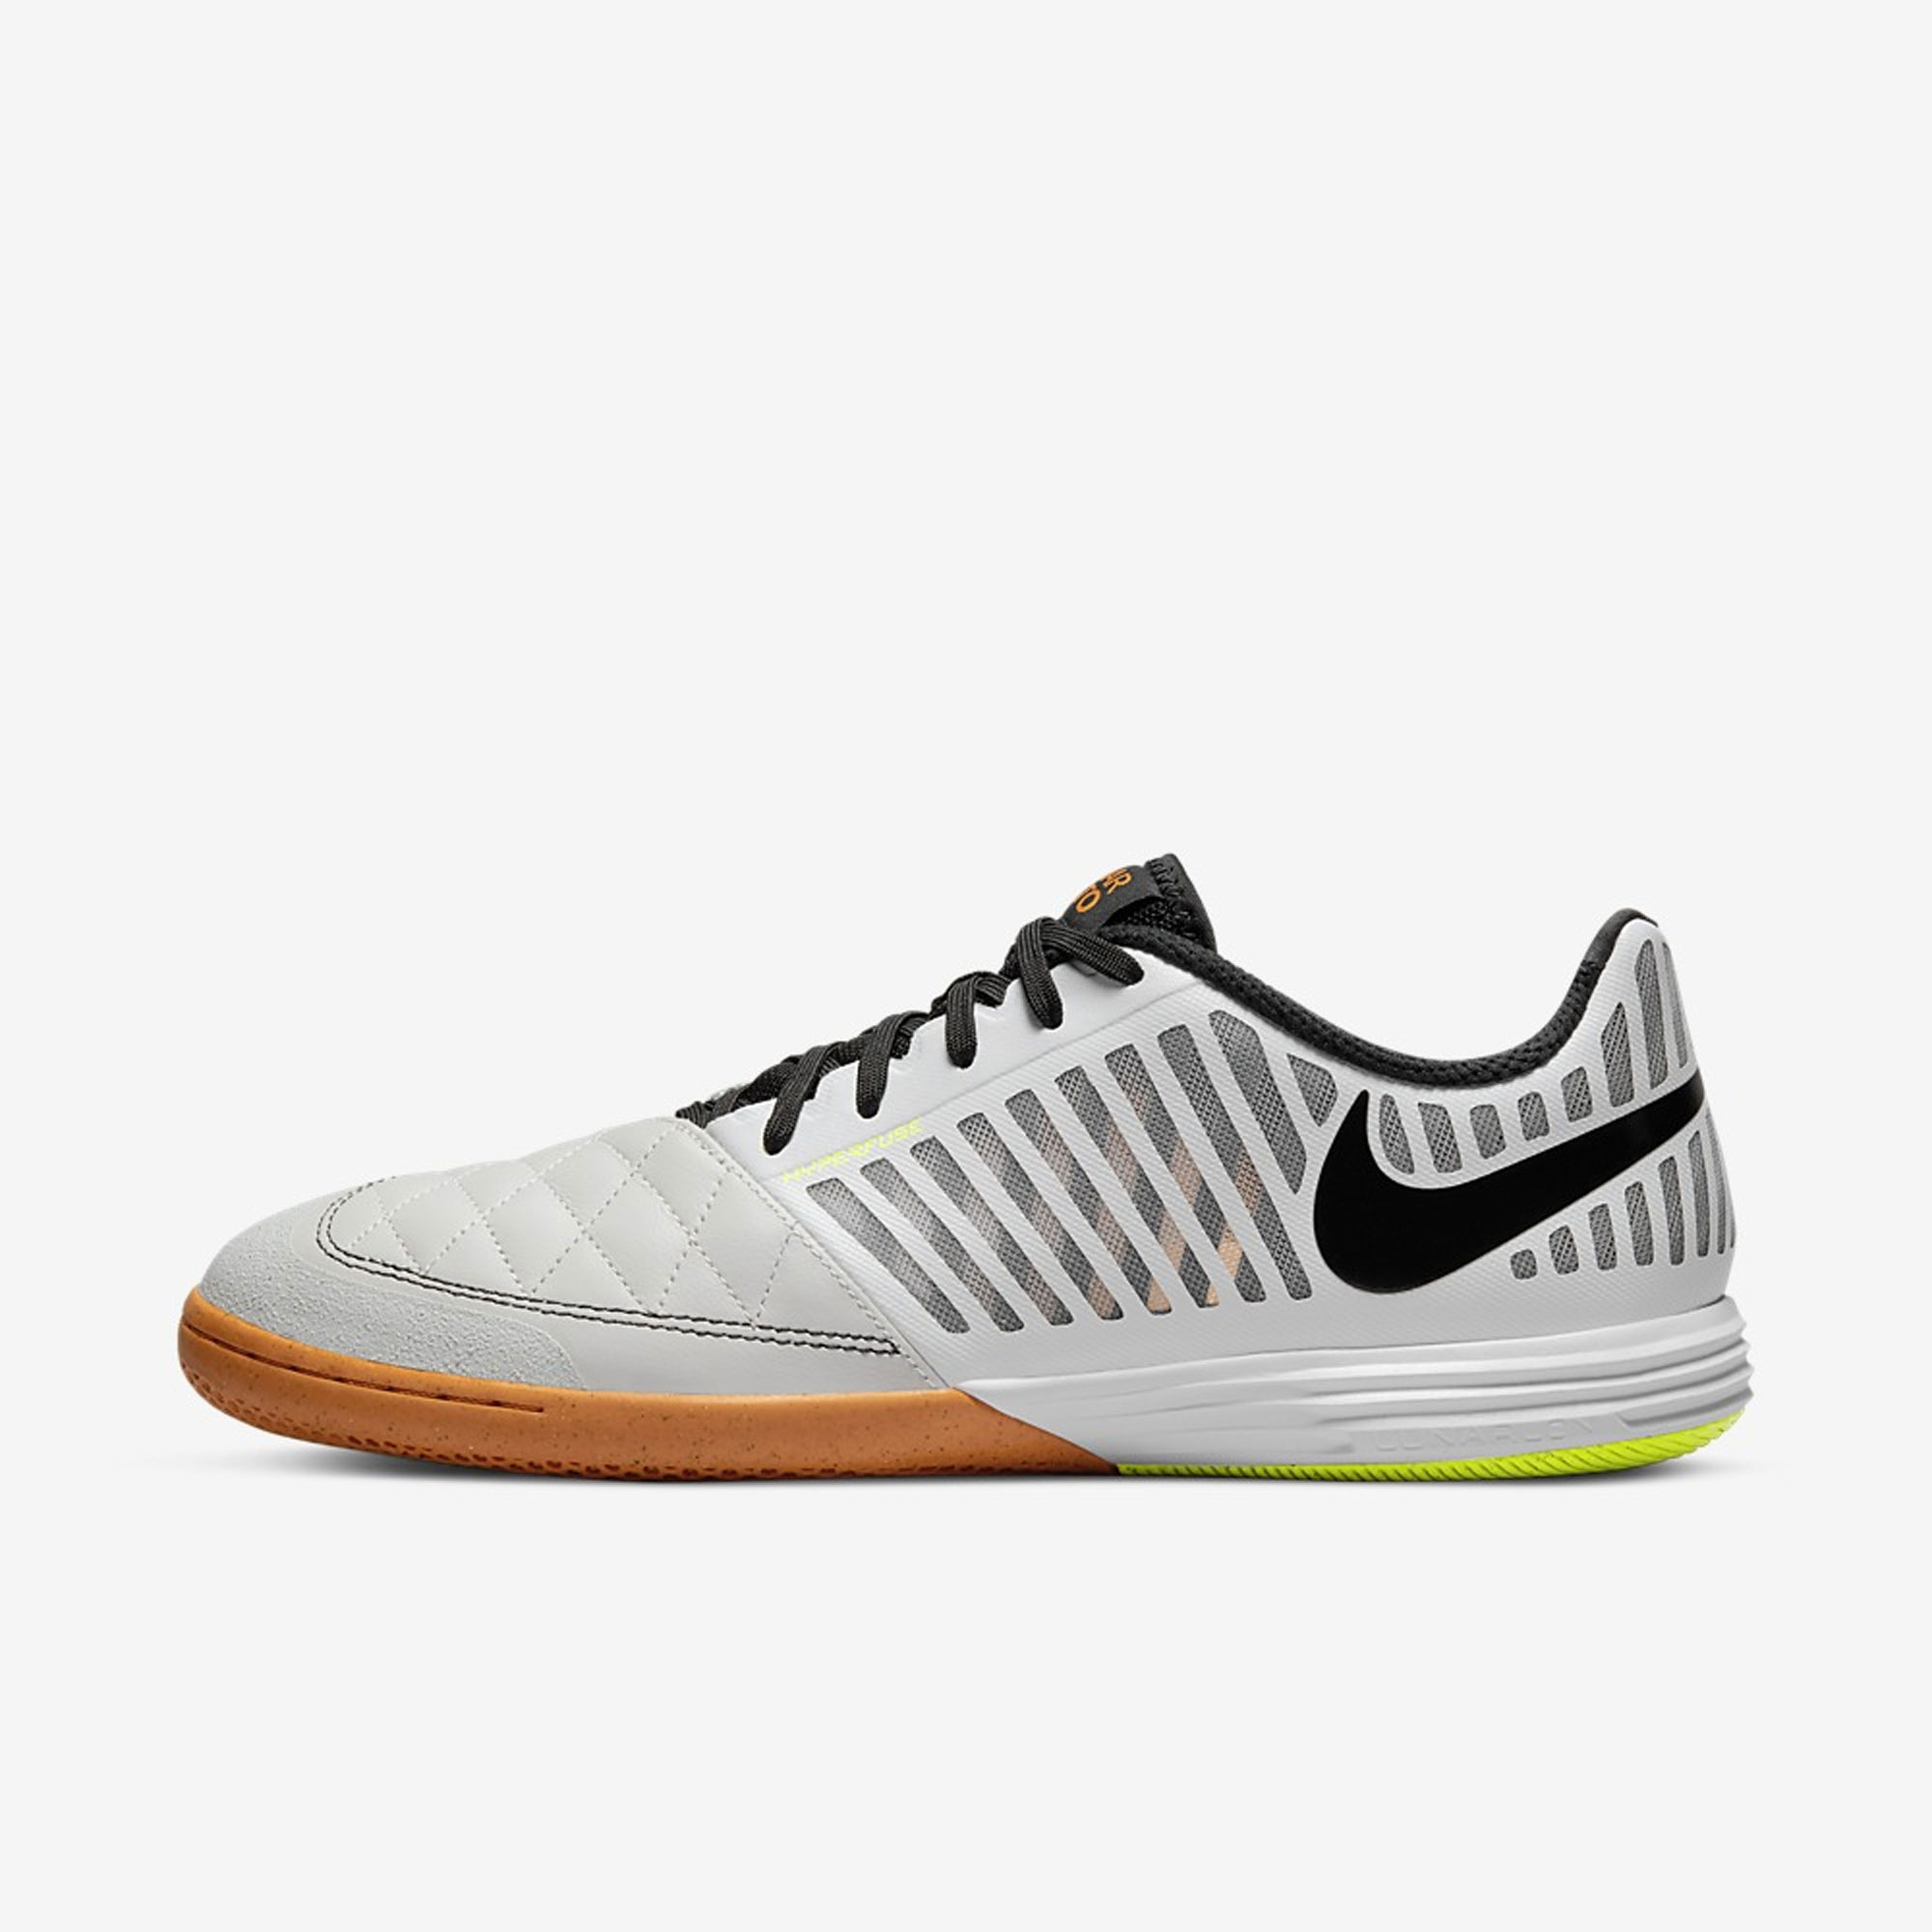 poll Aanvulling Kruis aan stefanssoccer.com:Nike Lunar Gato II Indoor Soccer Shoes - White / Photon  Dust / Light Curry / Black